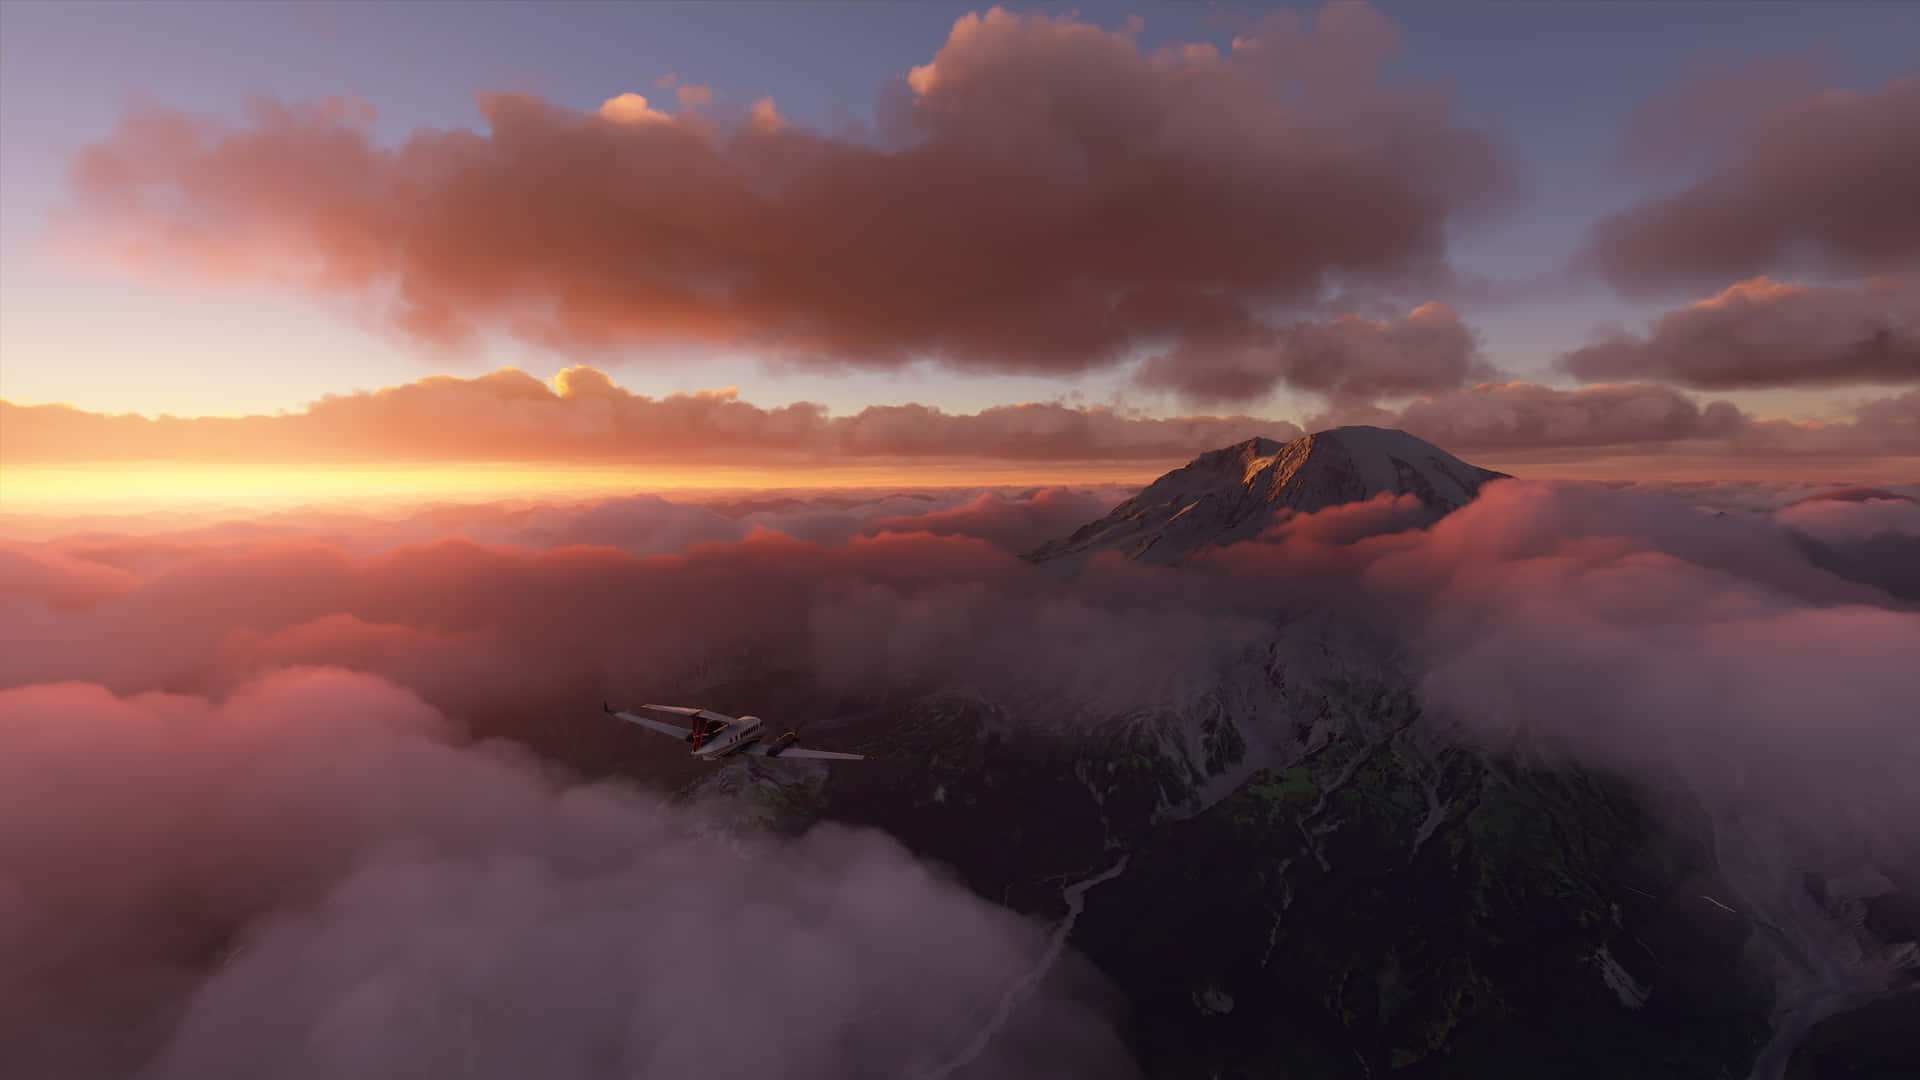 4k Microsoft Flight Simulator Background Plane Flying To A Mountain